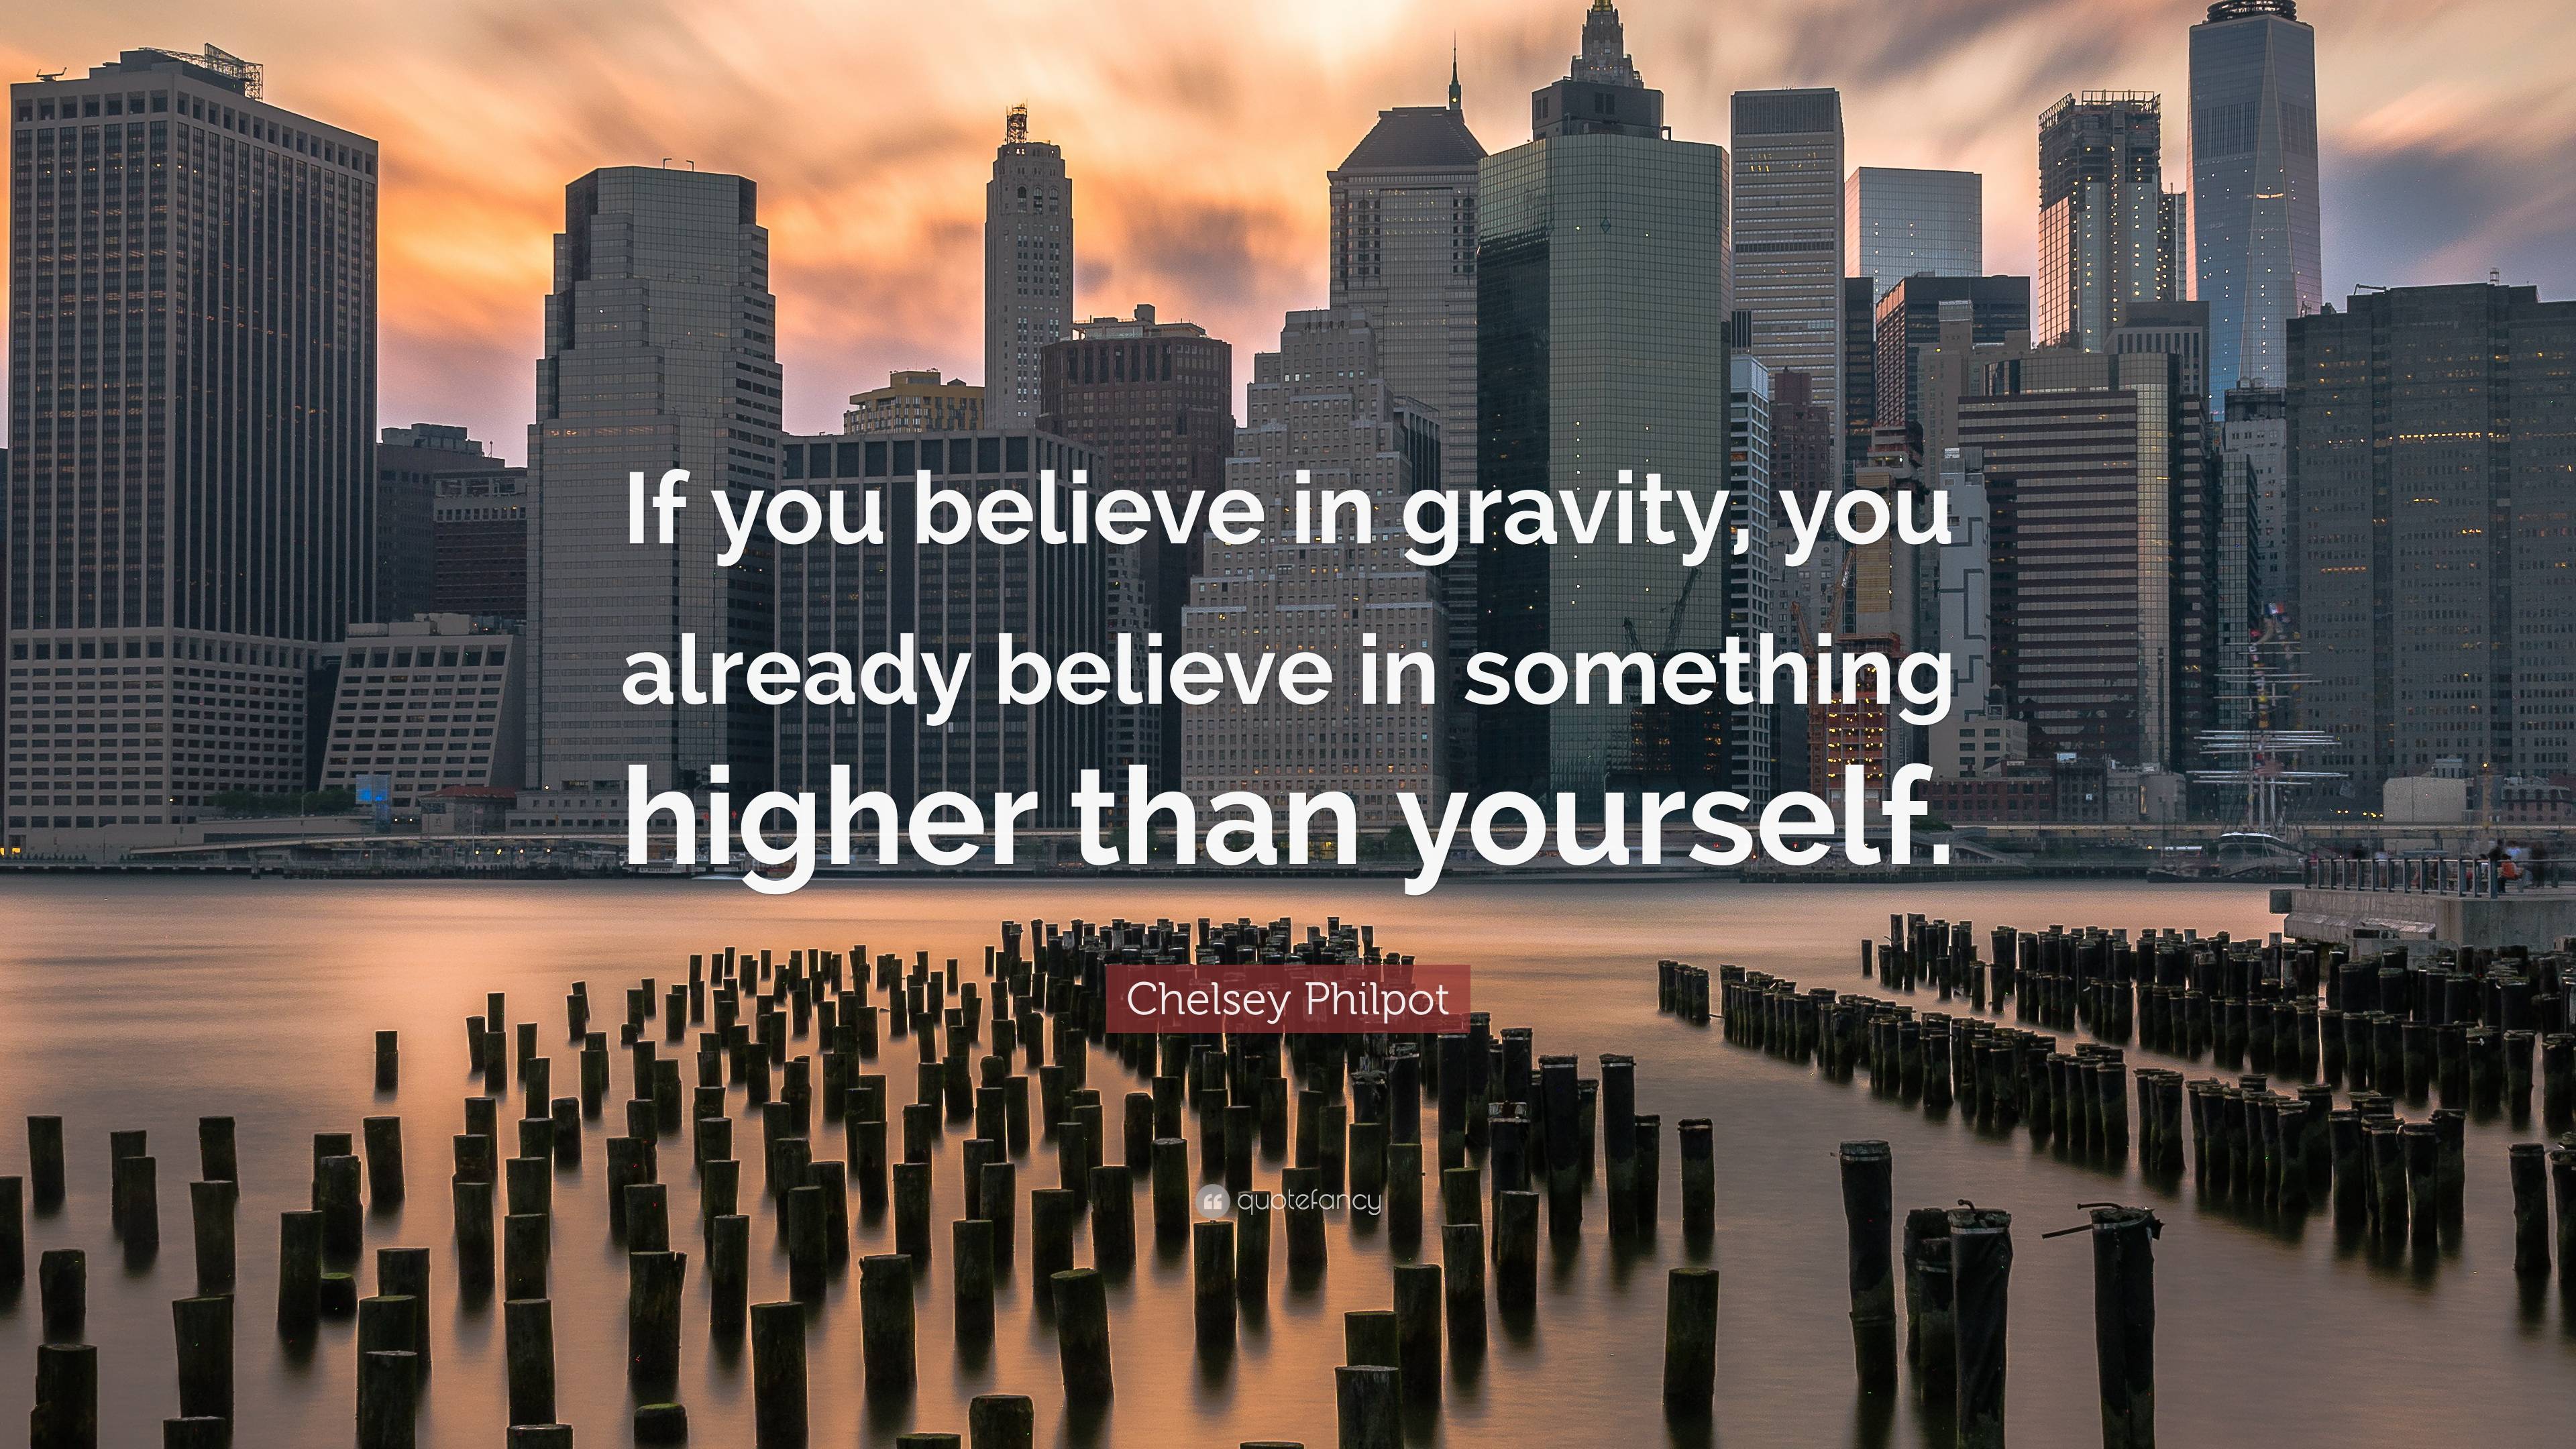 Do you believe in gravity?